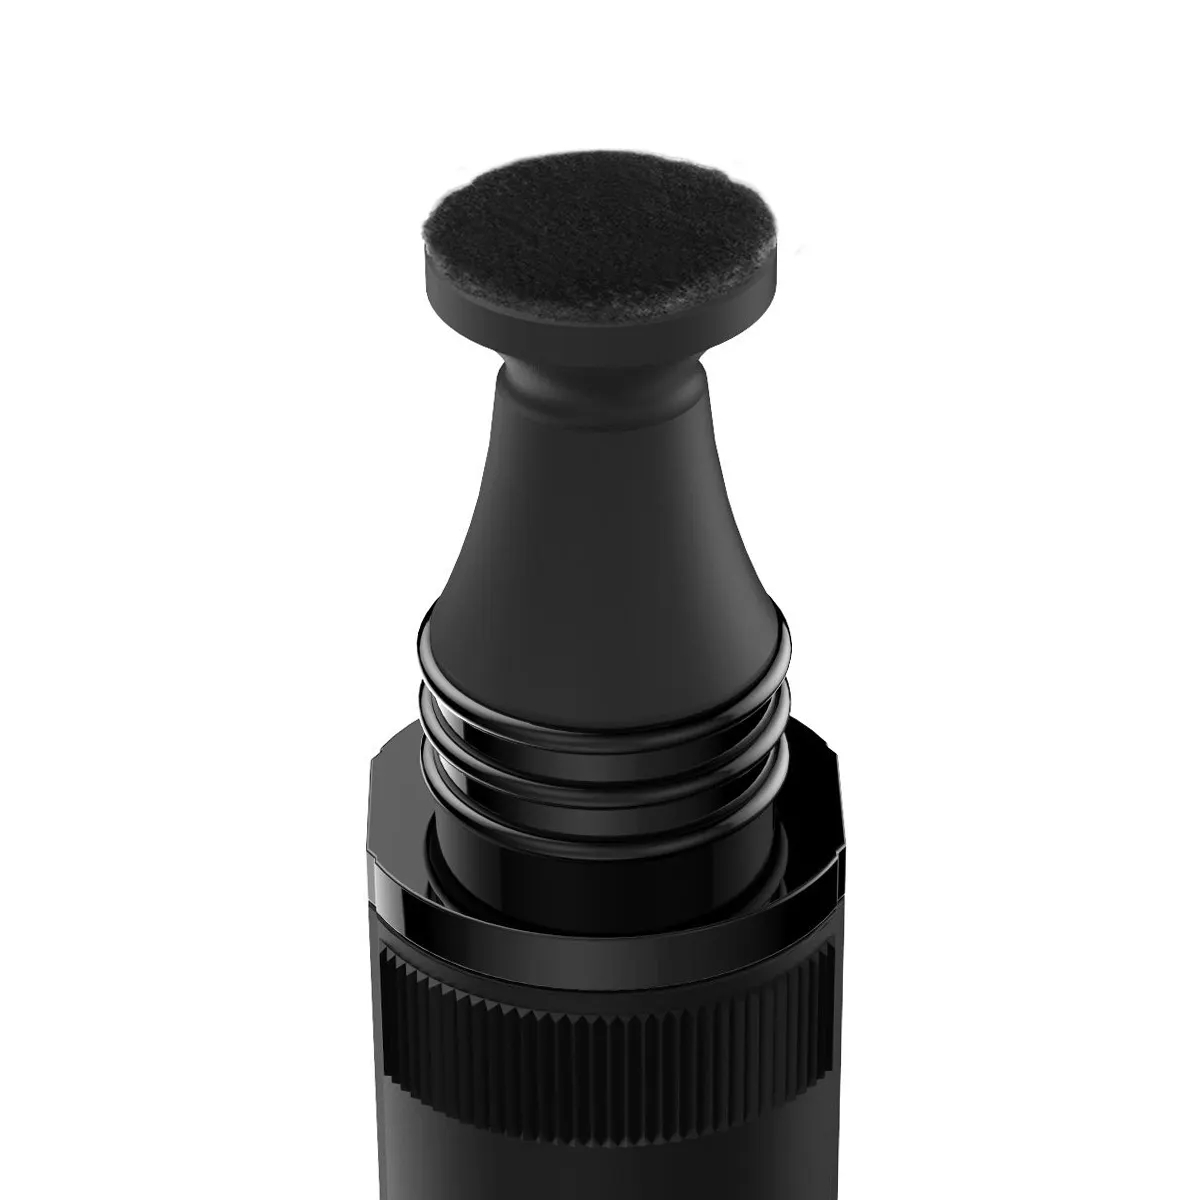 VSGO V-P01E Lens Clean Pen que es quiapo lens cleaning pen review for camera watch glass